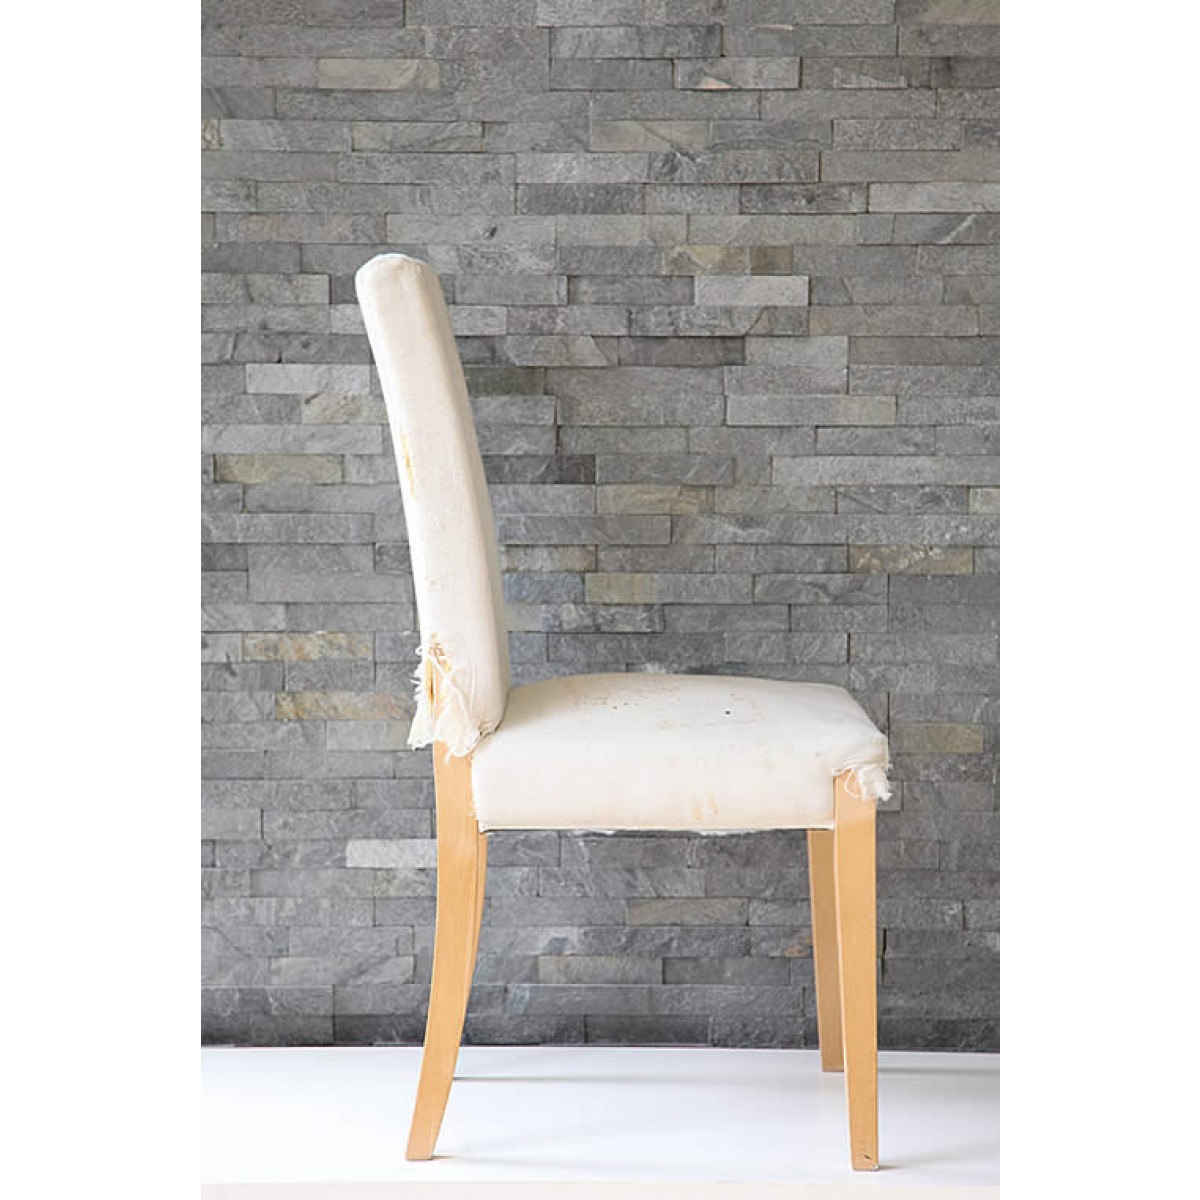  Chair Covers Ikea Furniture 